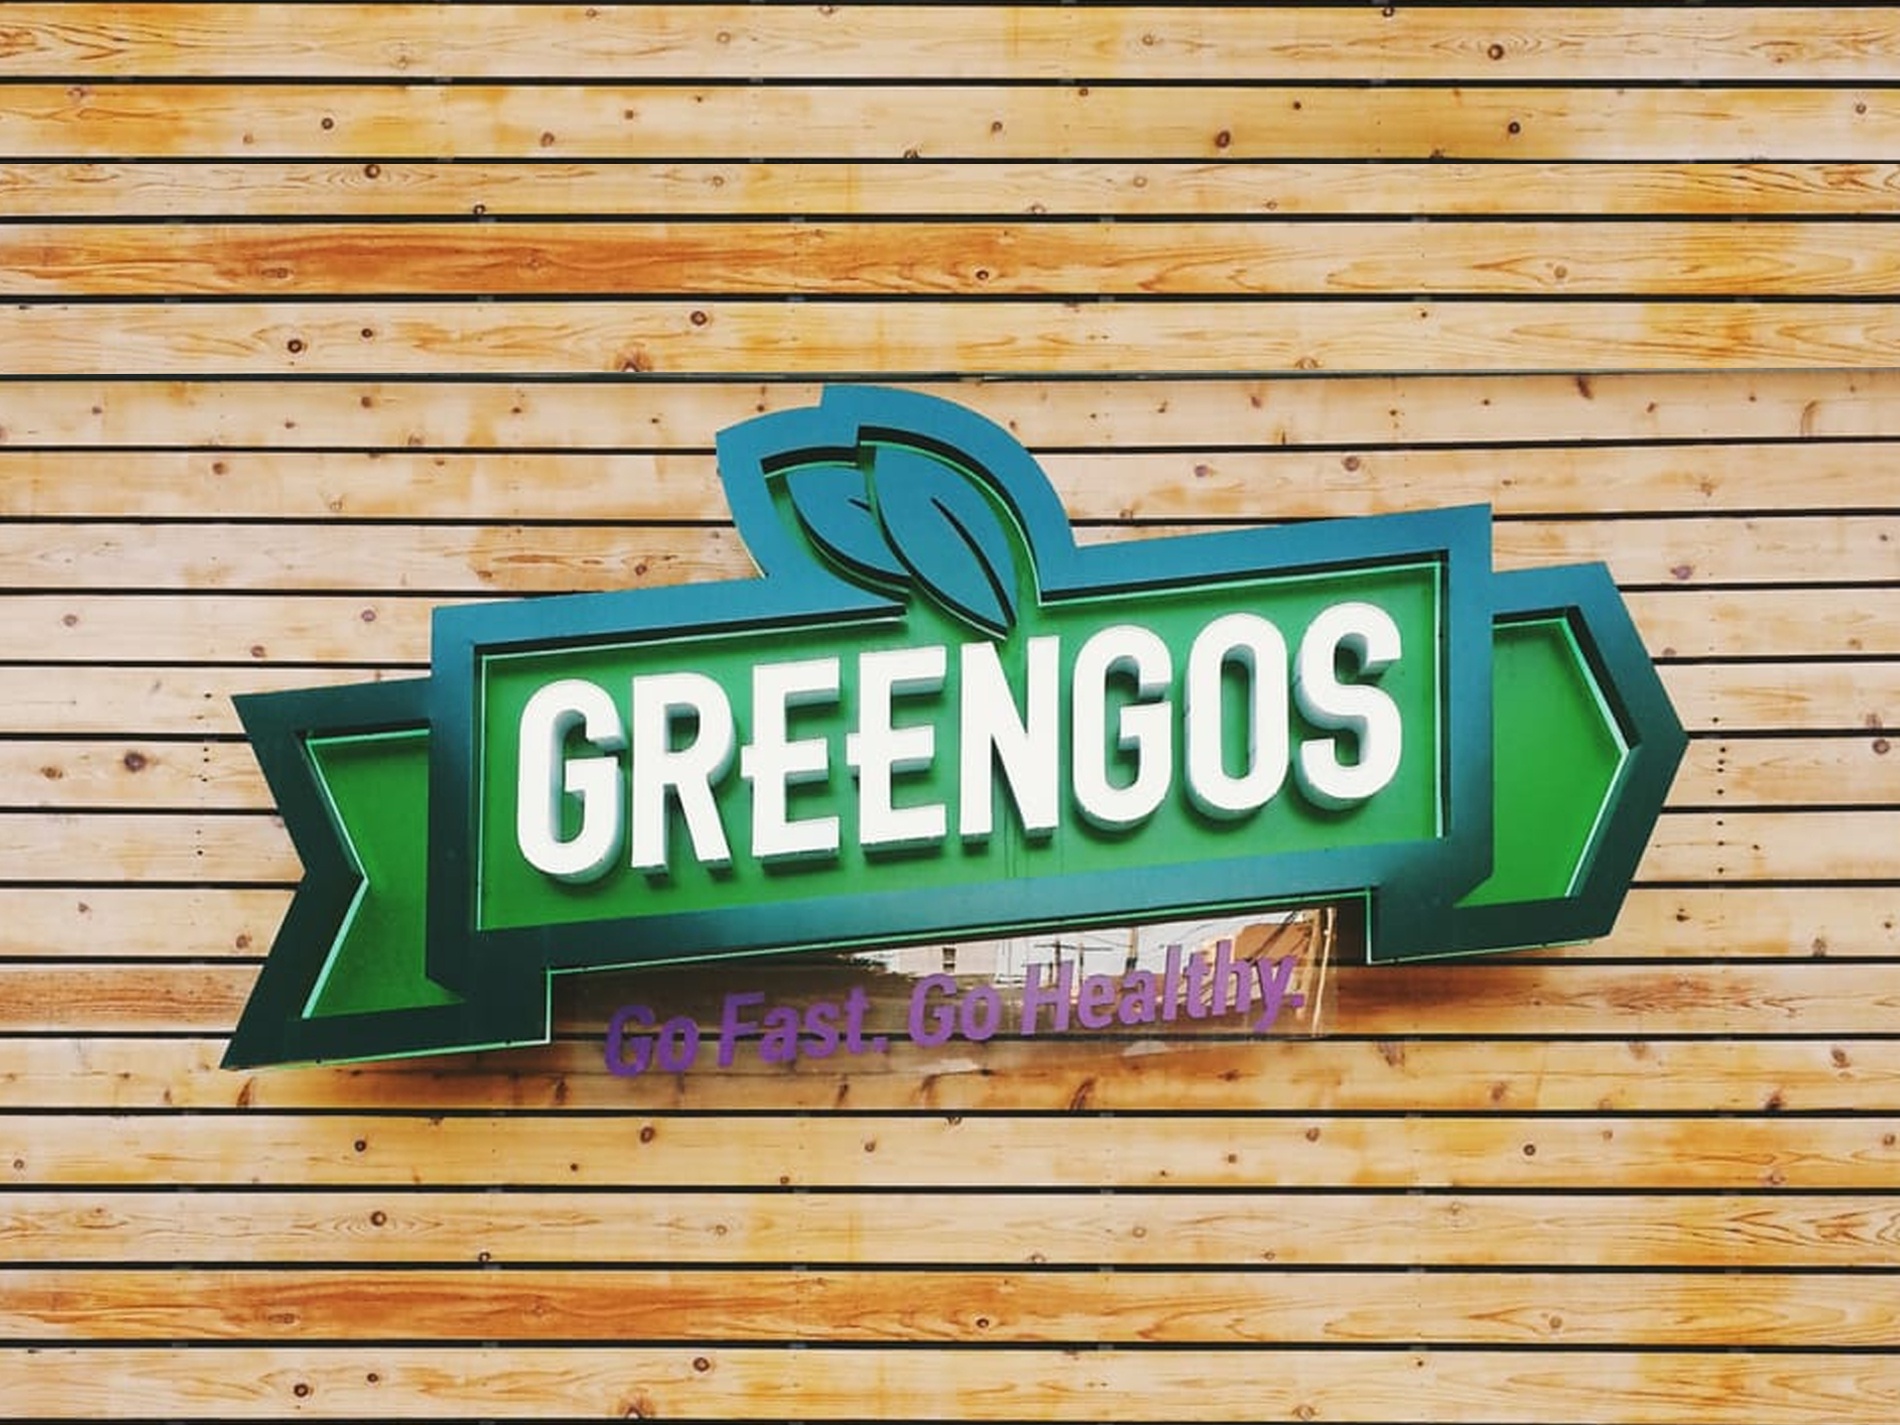 GreenGos